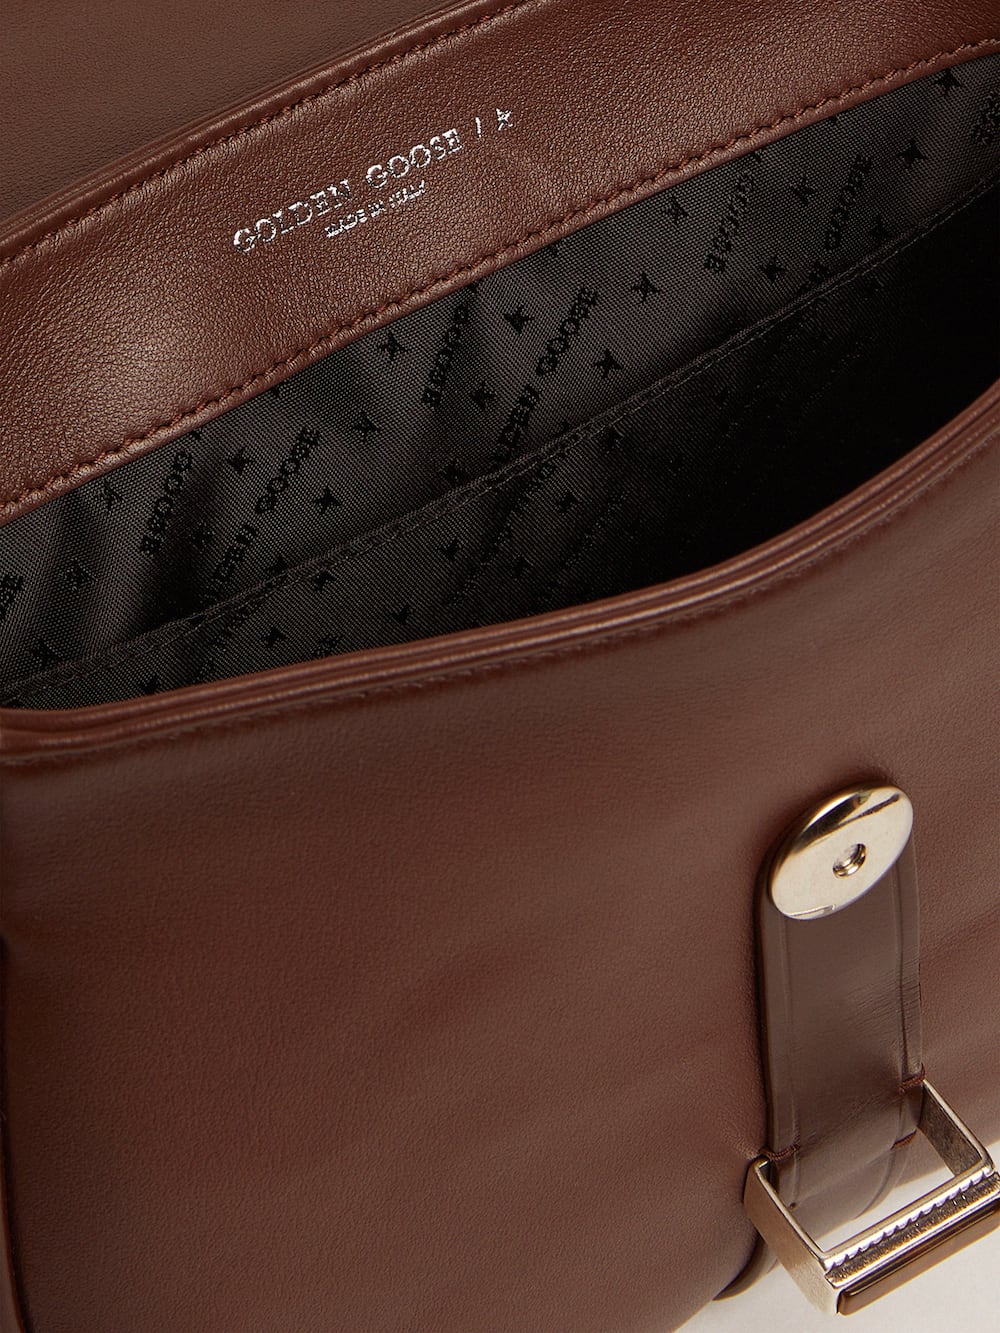 Golden Goose - Women's small Rodeo Bag in dark tan leather in 